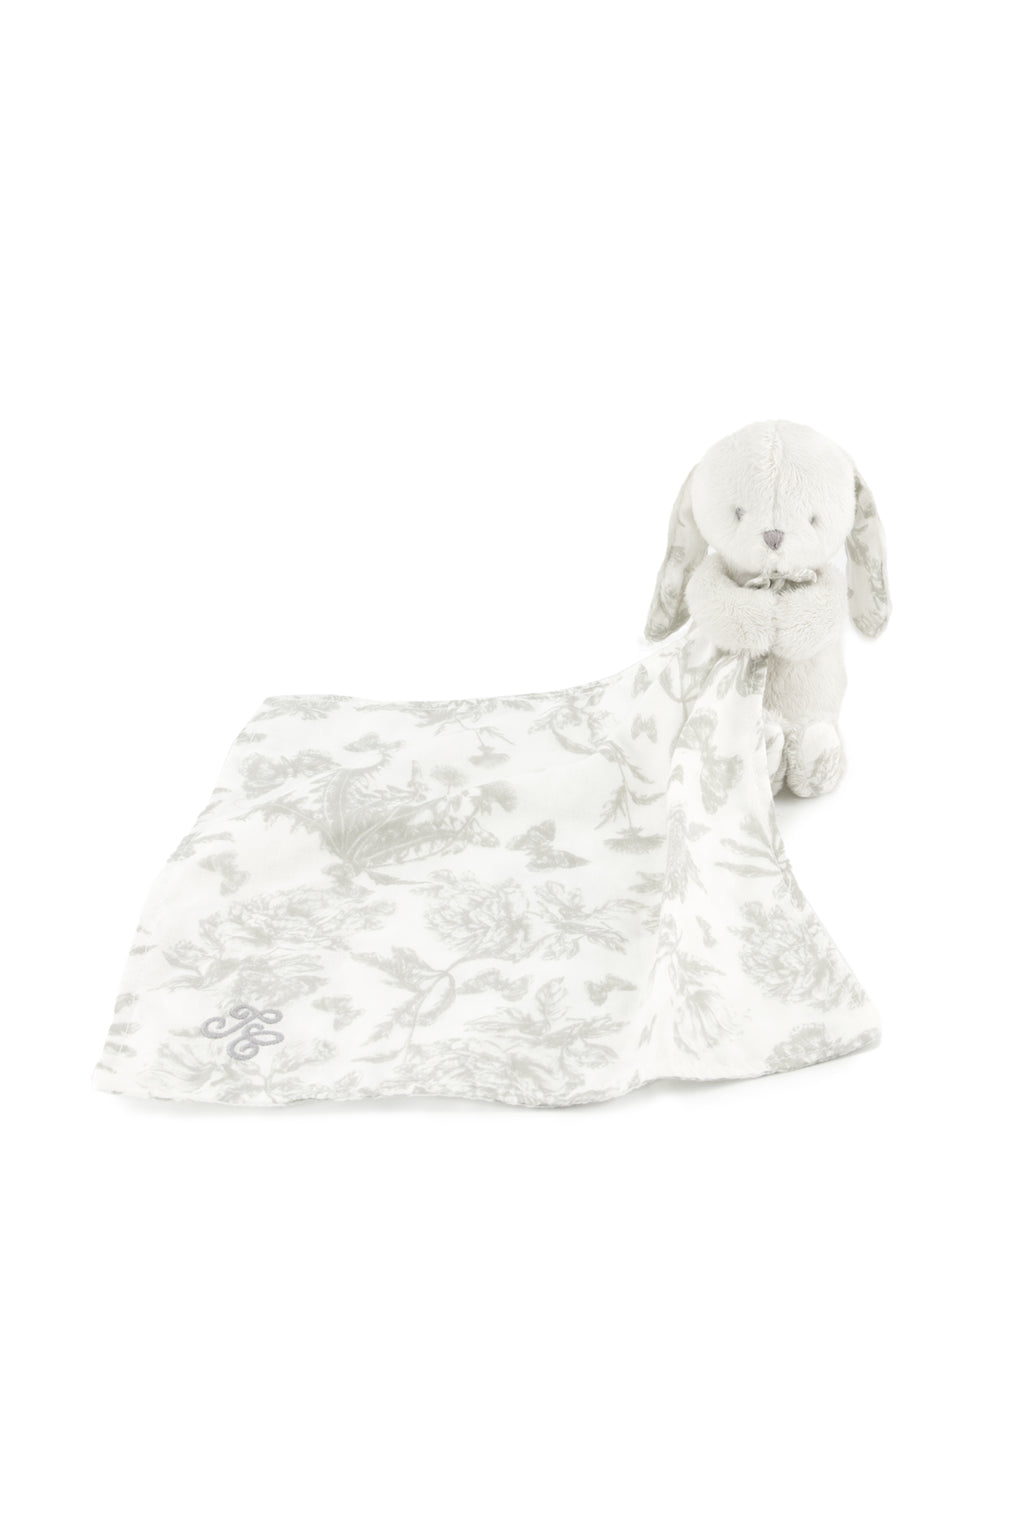 Augustin the rabbit - Comforter Print inspiration Toile de Jouy Grey